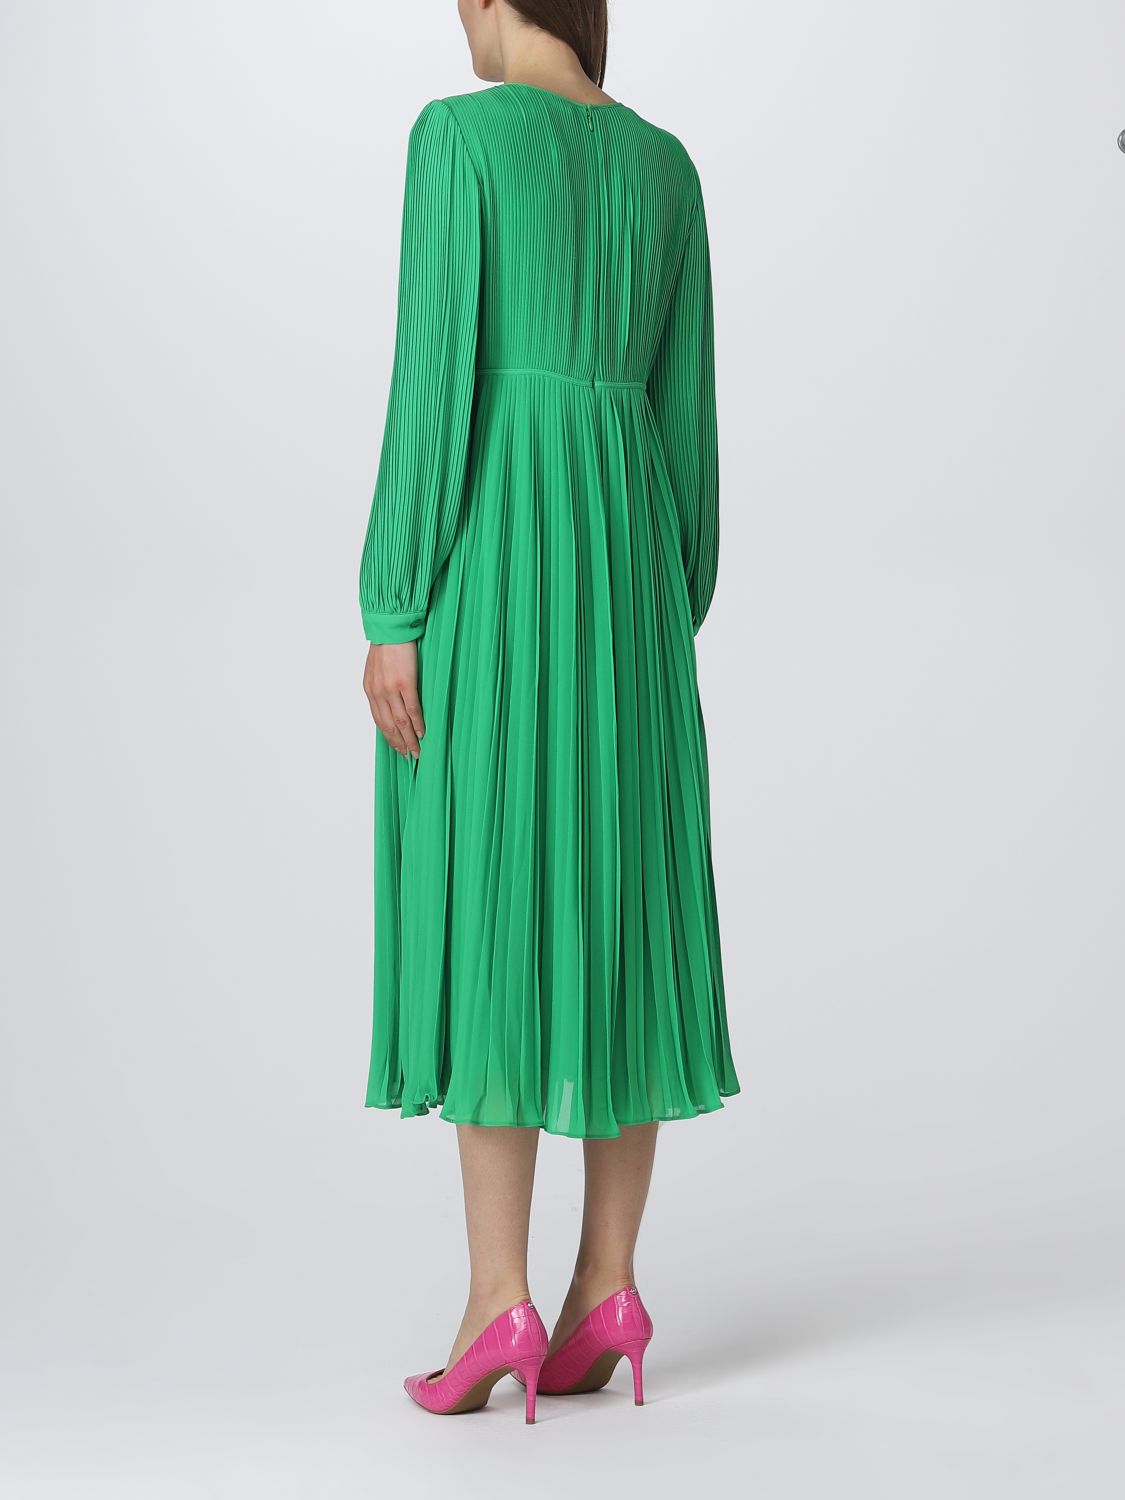 MICHAEL KORS: dress for woman - Green | Michael Kors dress MR381FY7R3  online on 